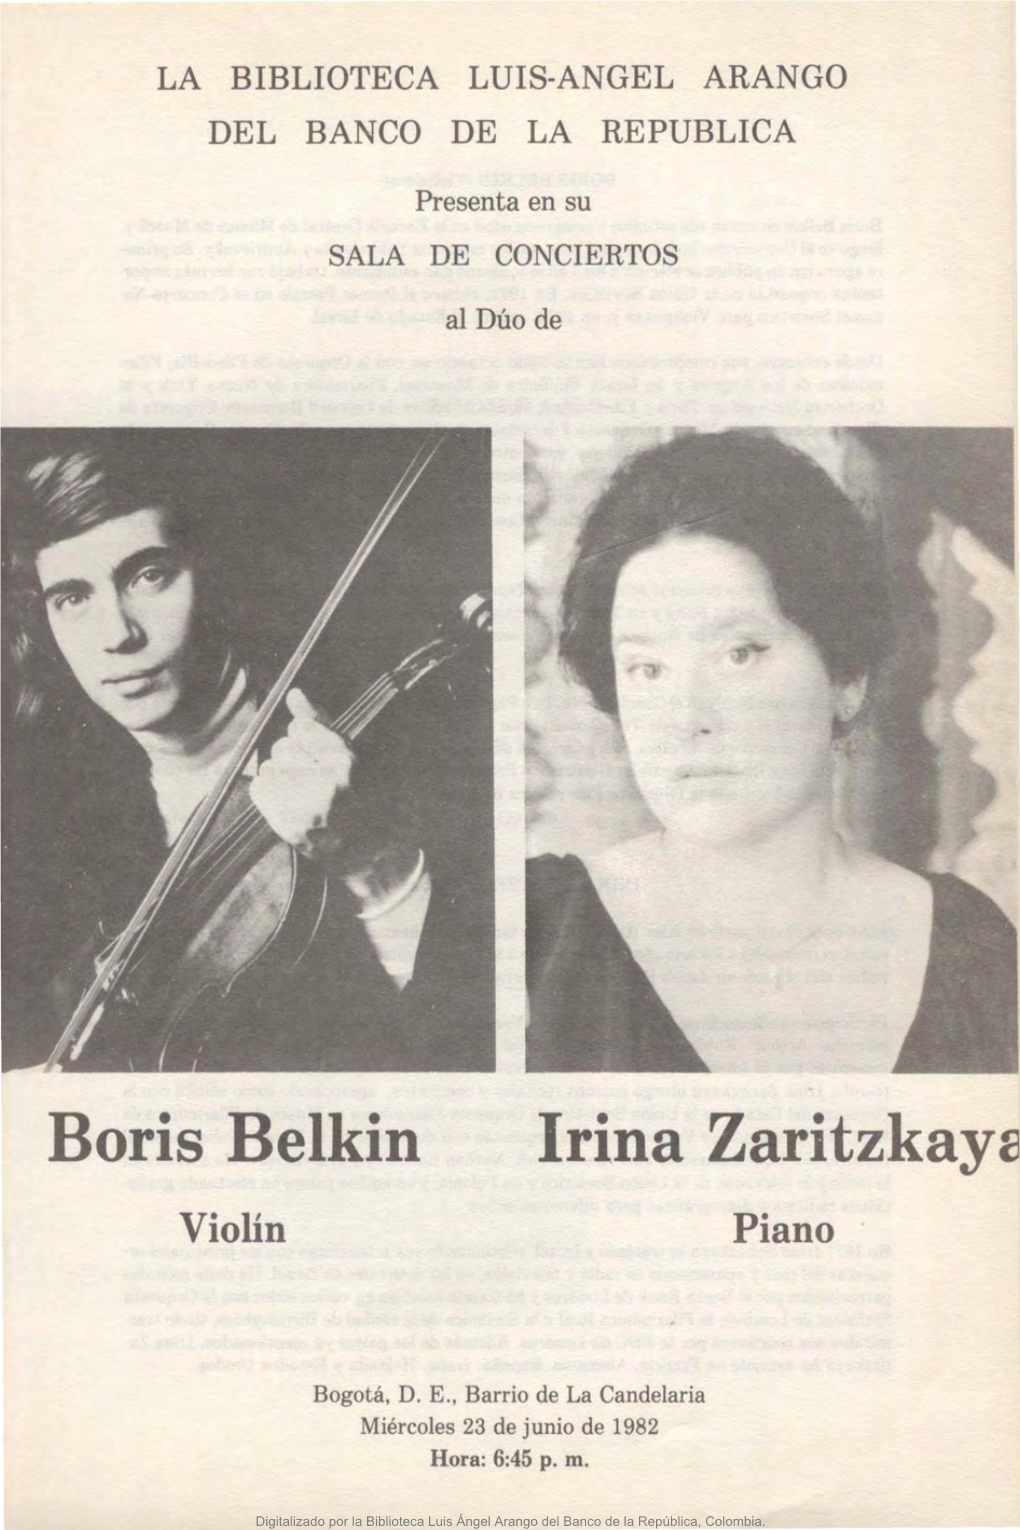 Boris Belkin Violinista Irina Zaritzkaya